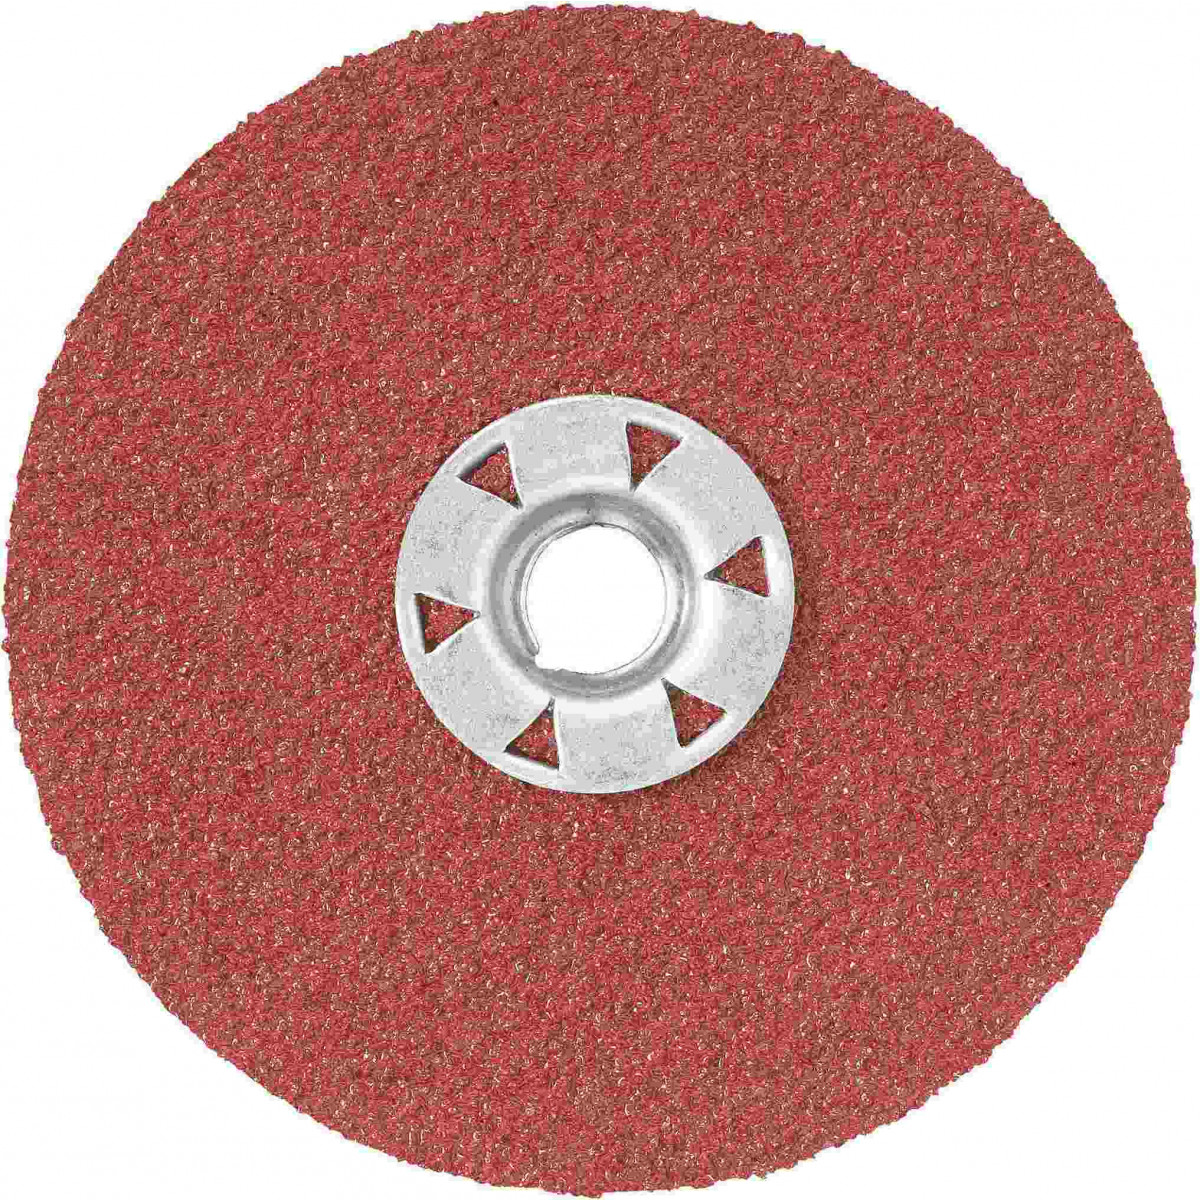 5 x 5/8 50G Ceramic Resin Fibre Disc